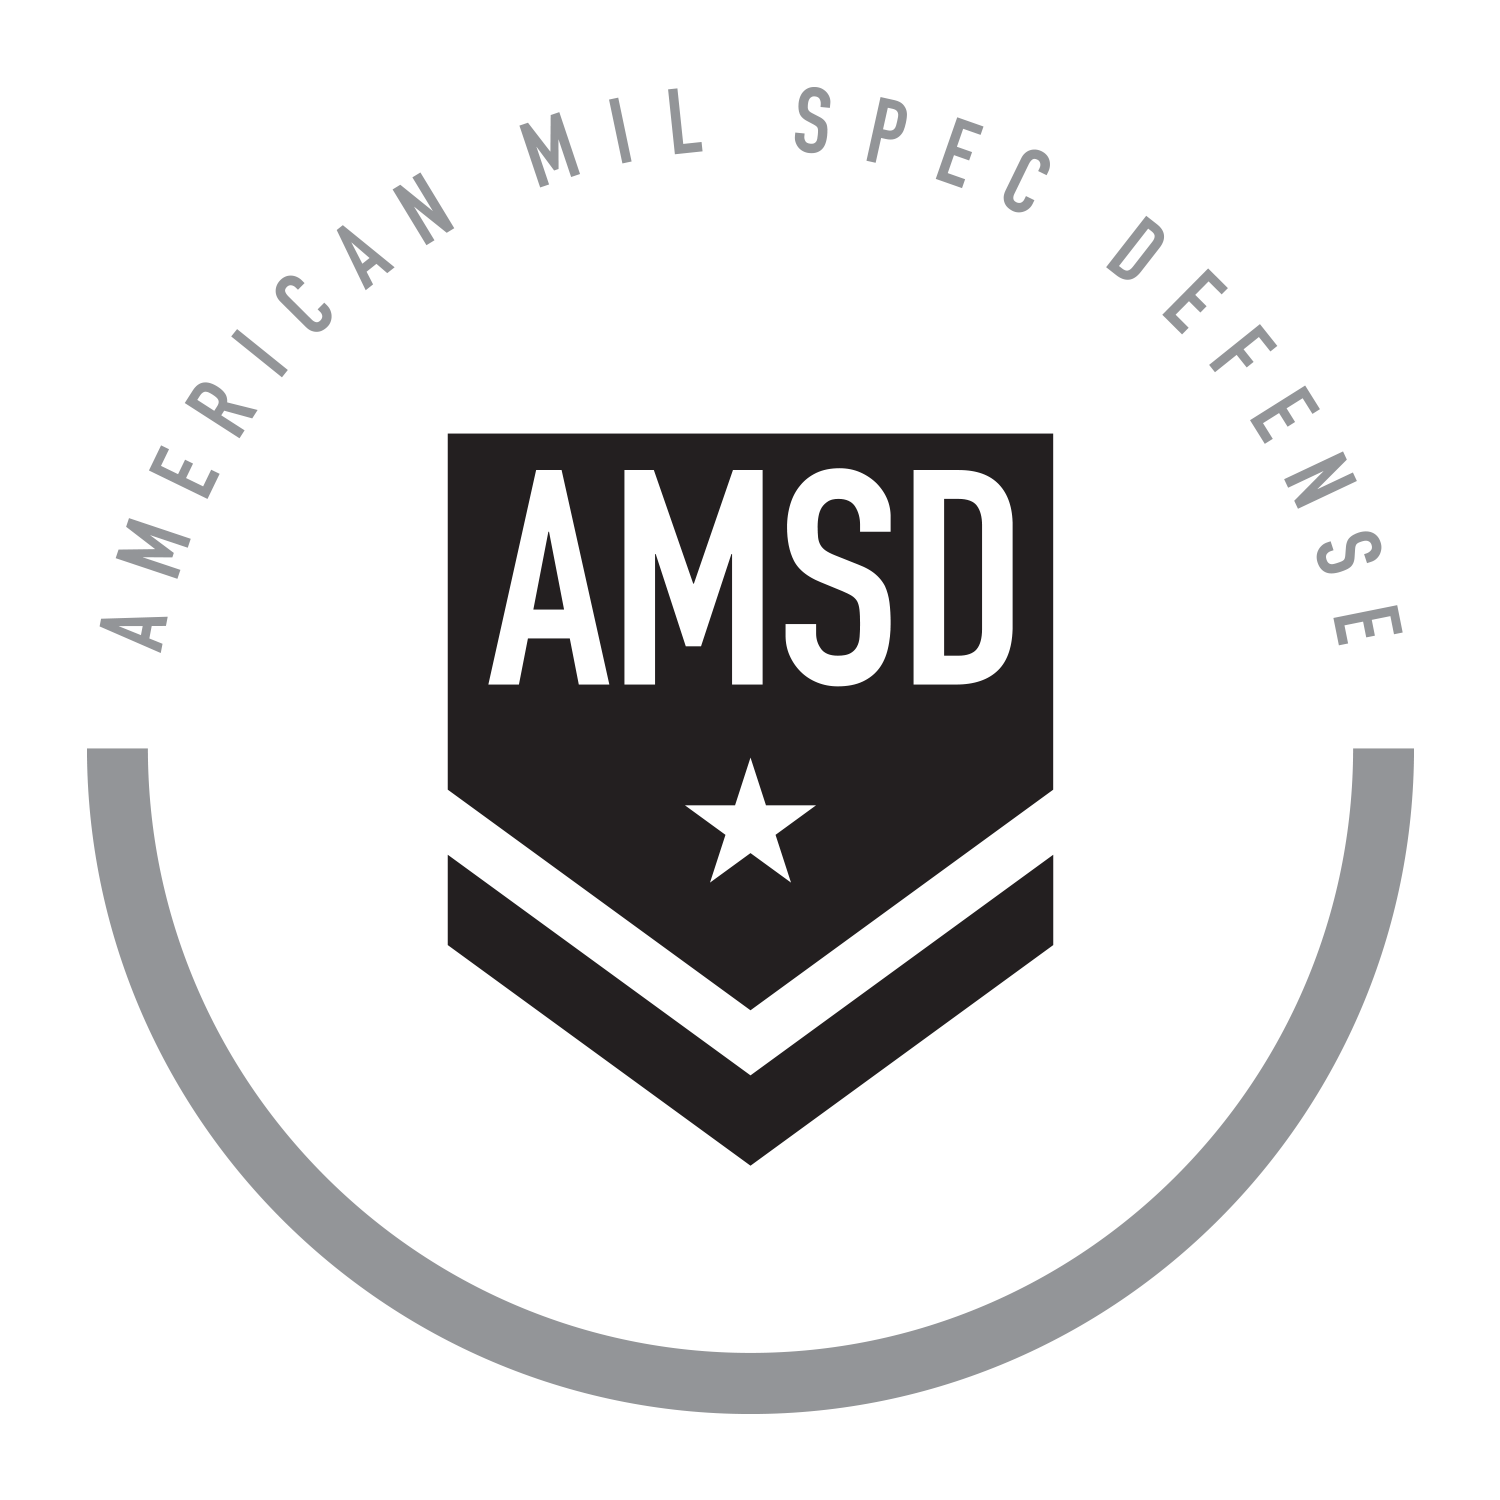 American Mil Spec Defense